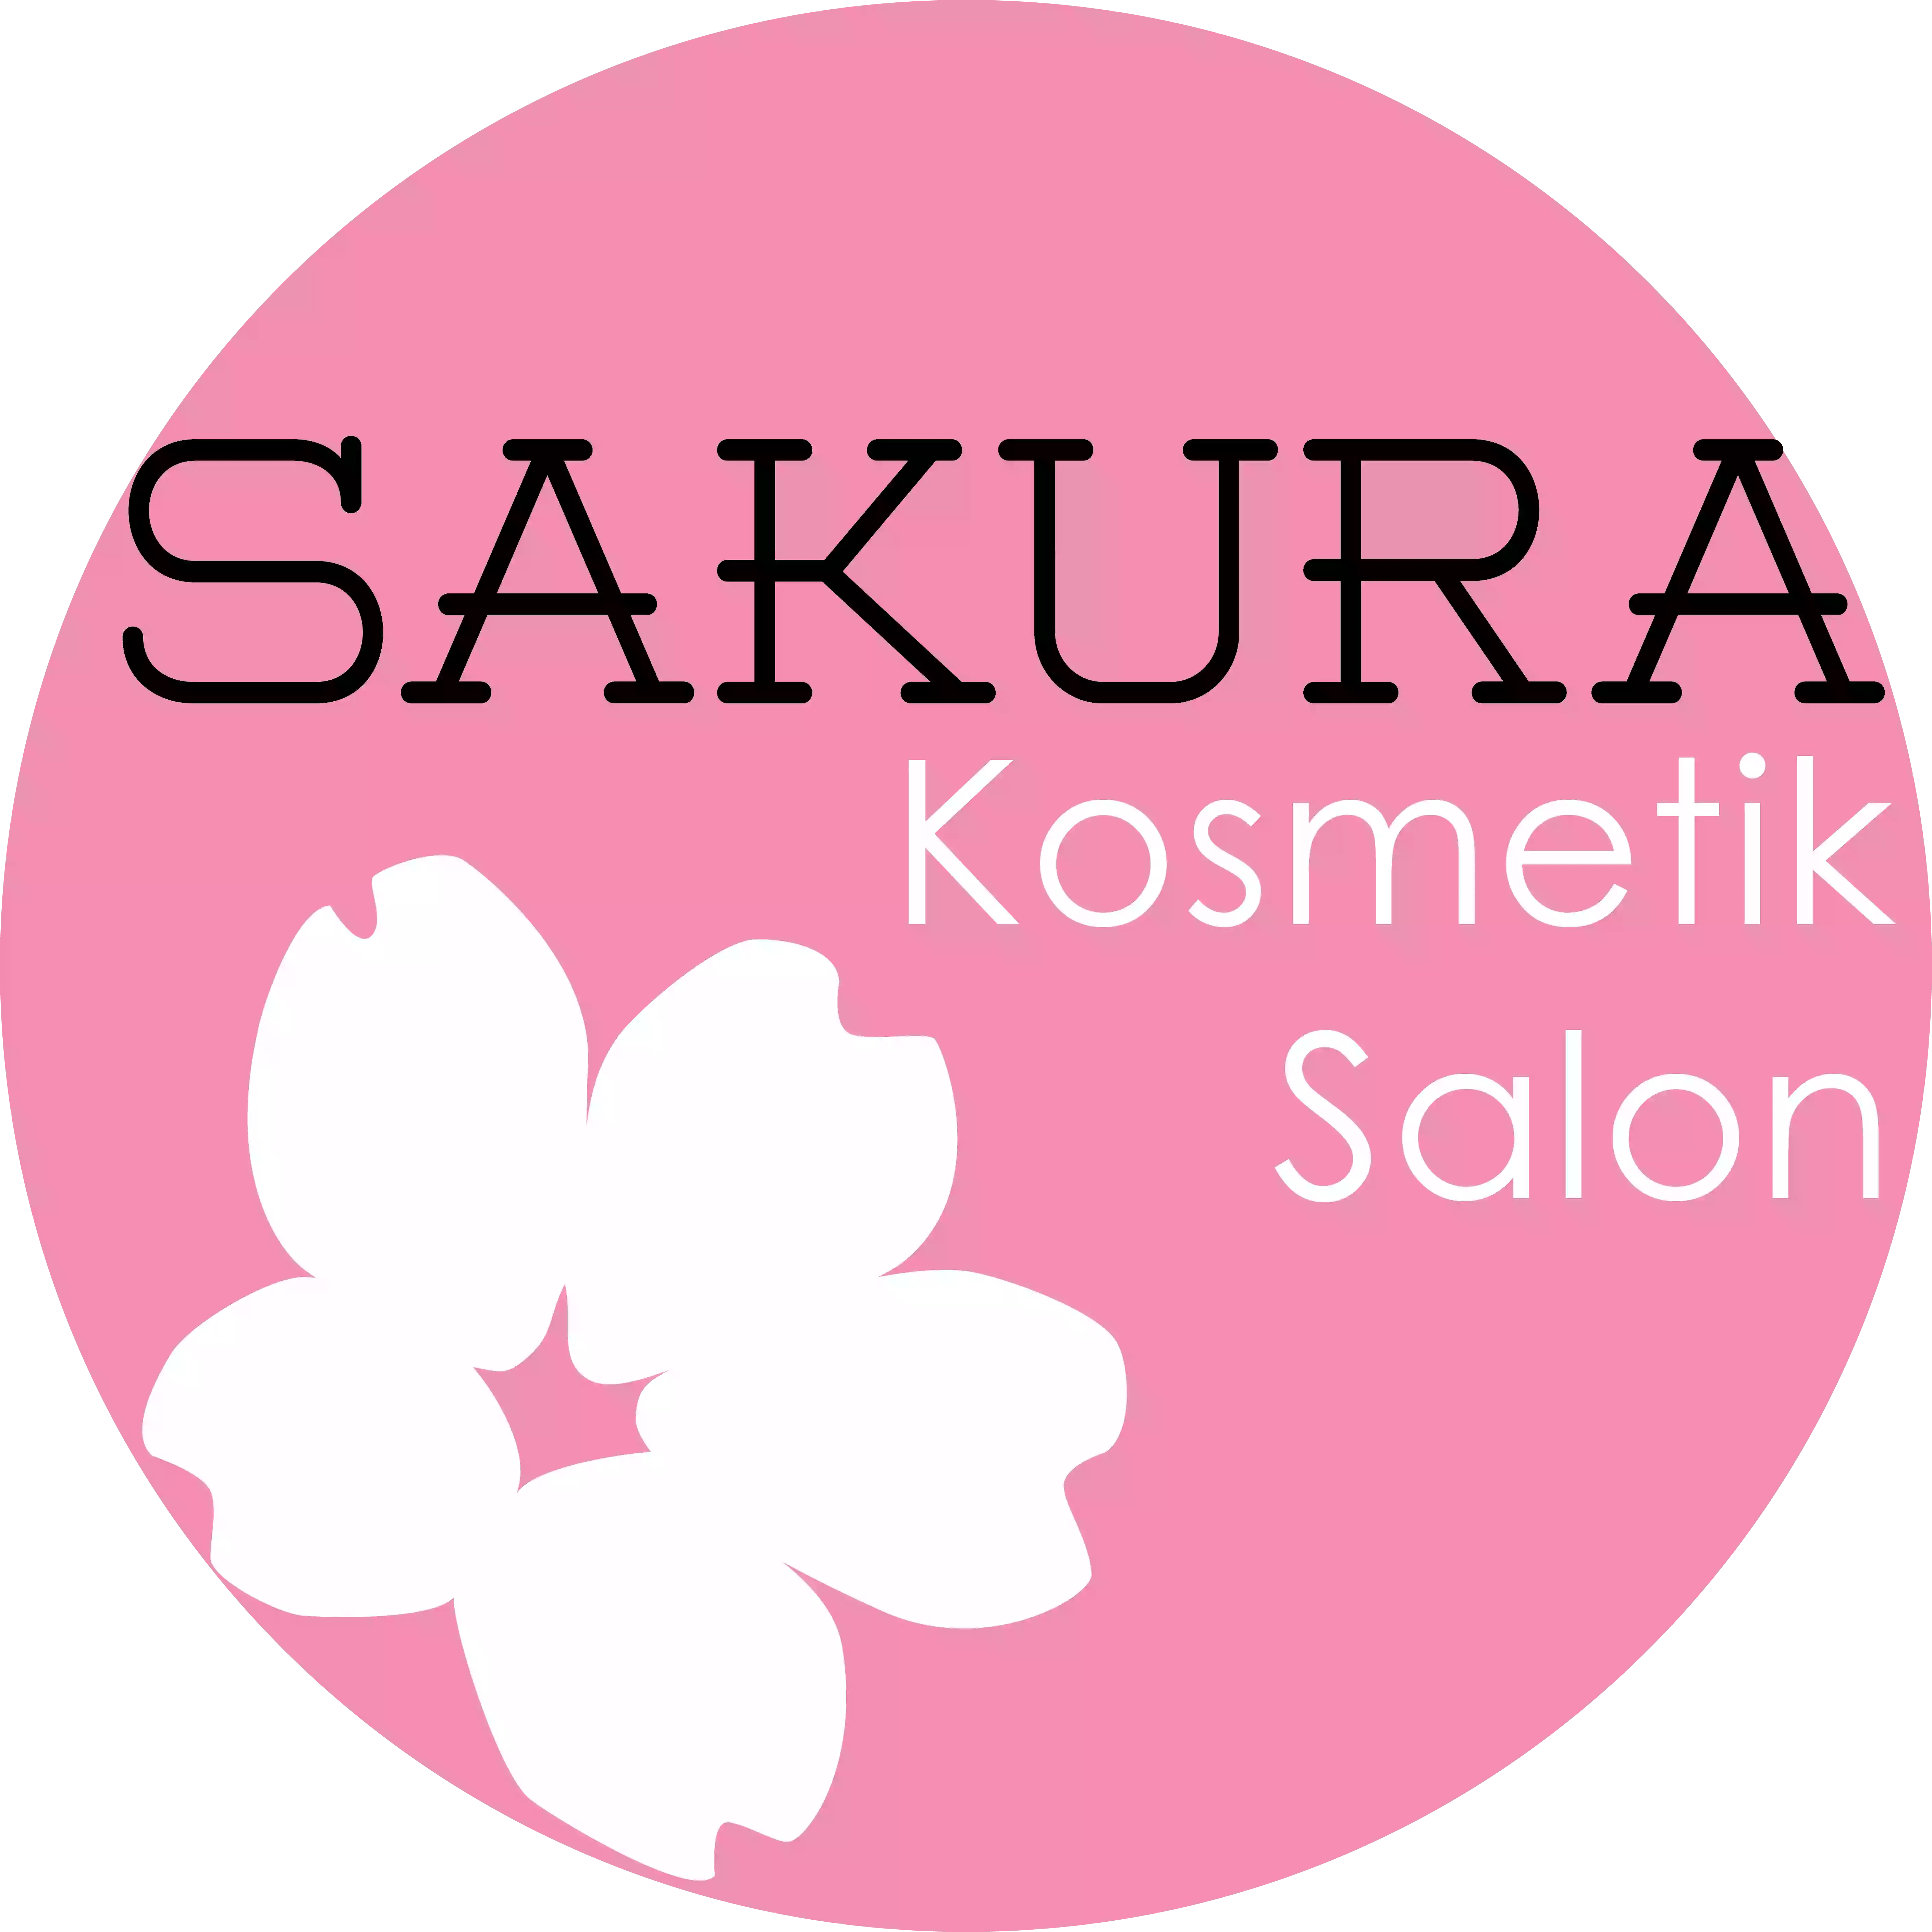 Kosmetiksalon Sakura